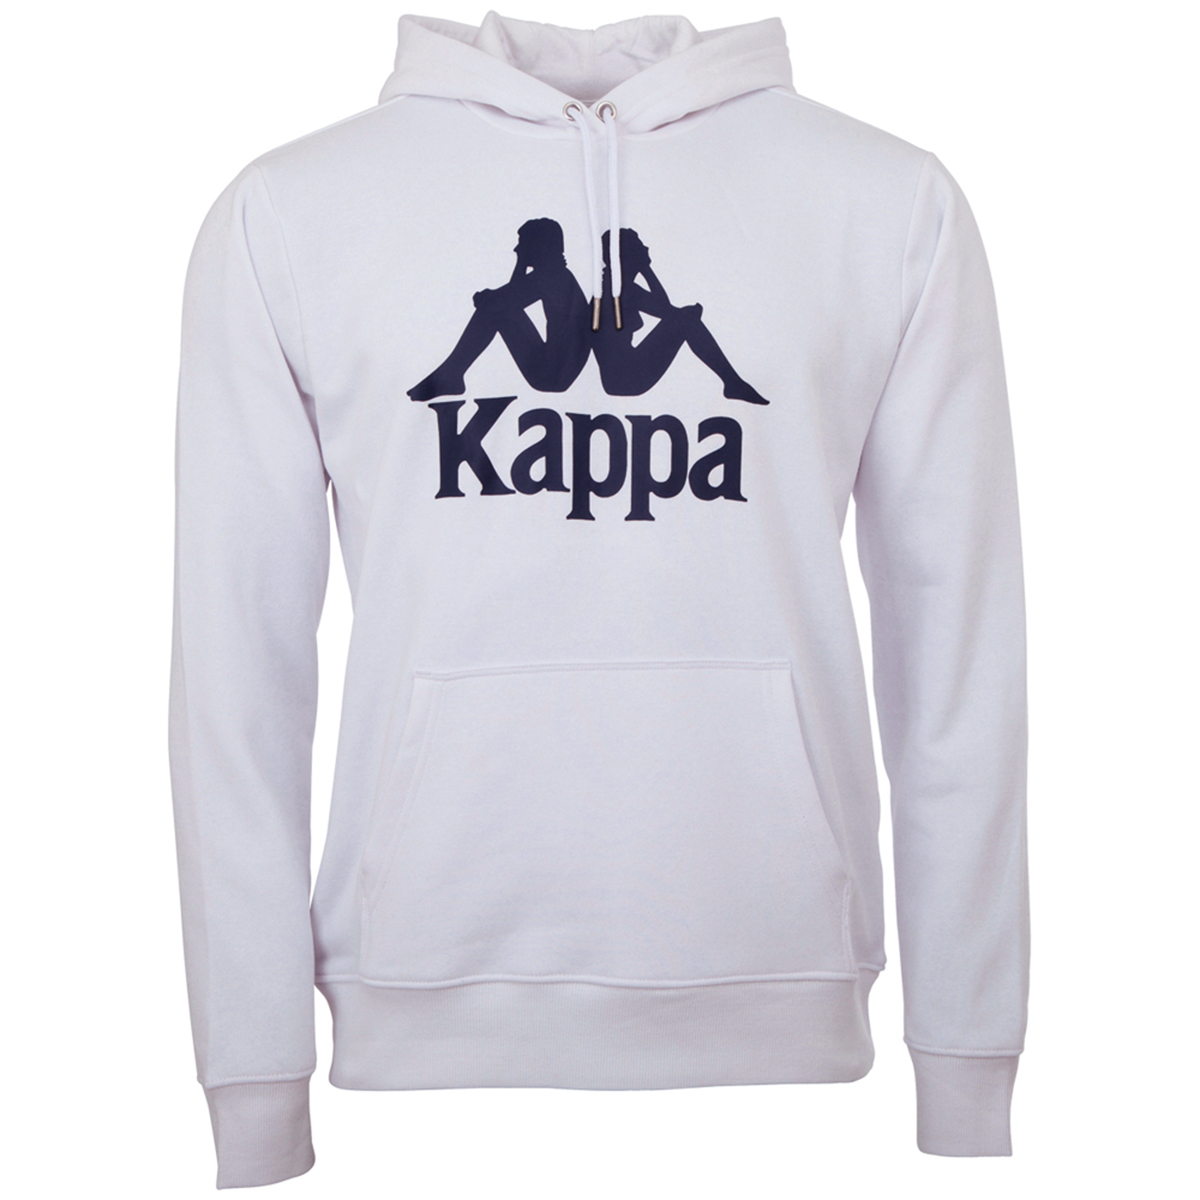 Kappa Unisex Hooded Sweatshirt white 705322 001 S von Kappa